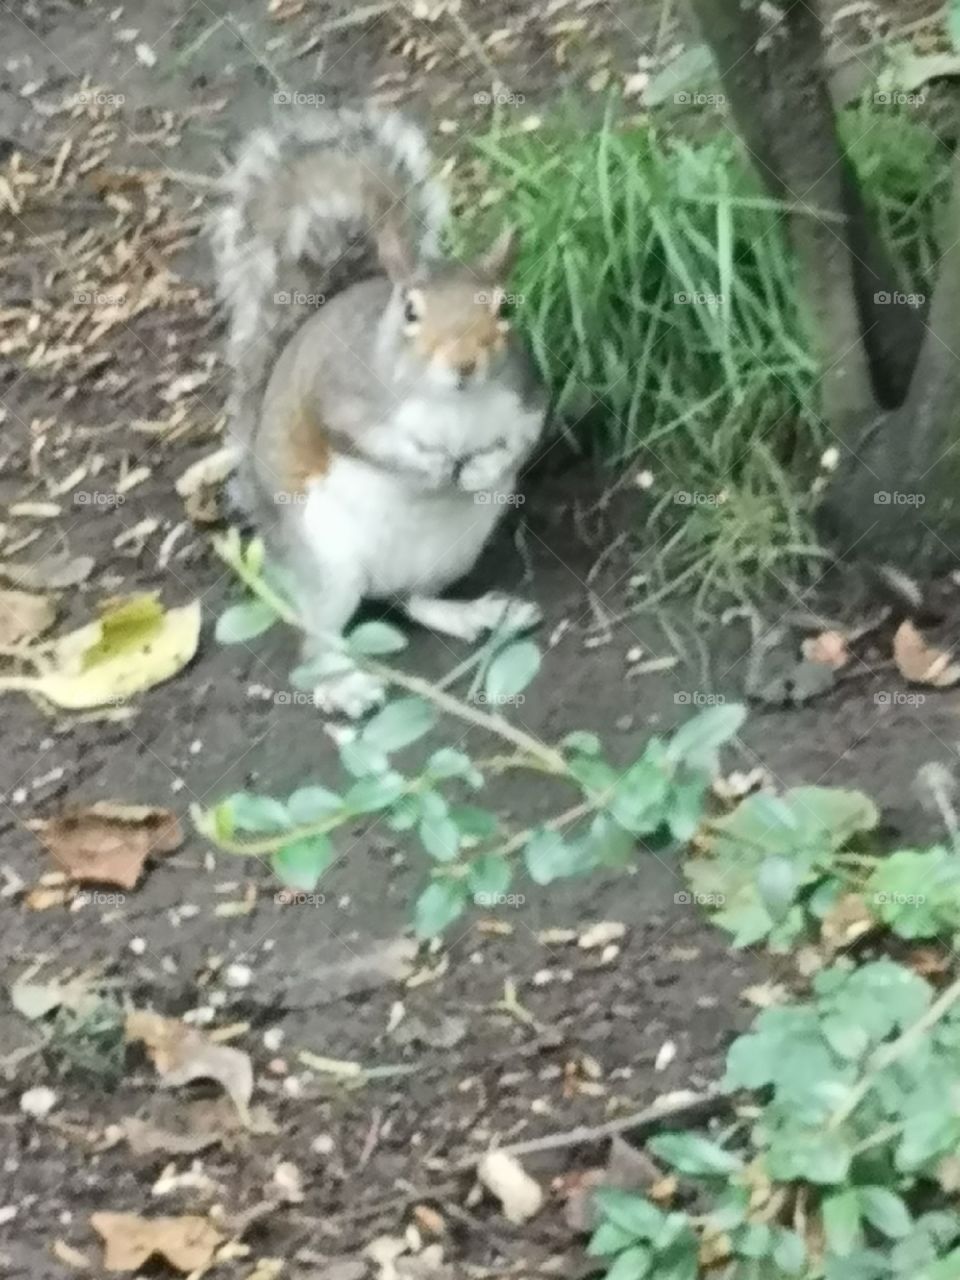 Curious little squirrel